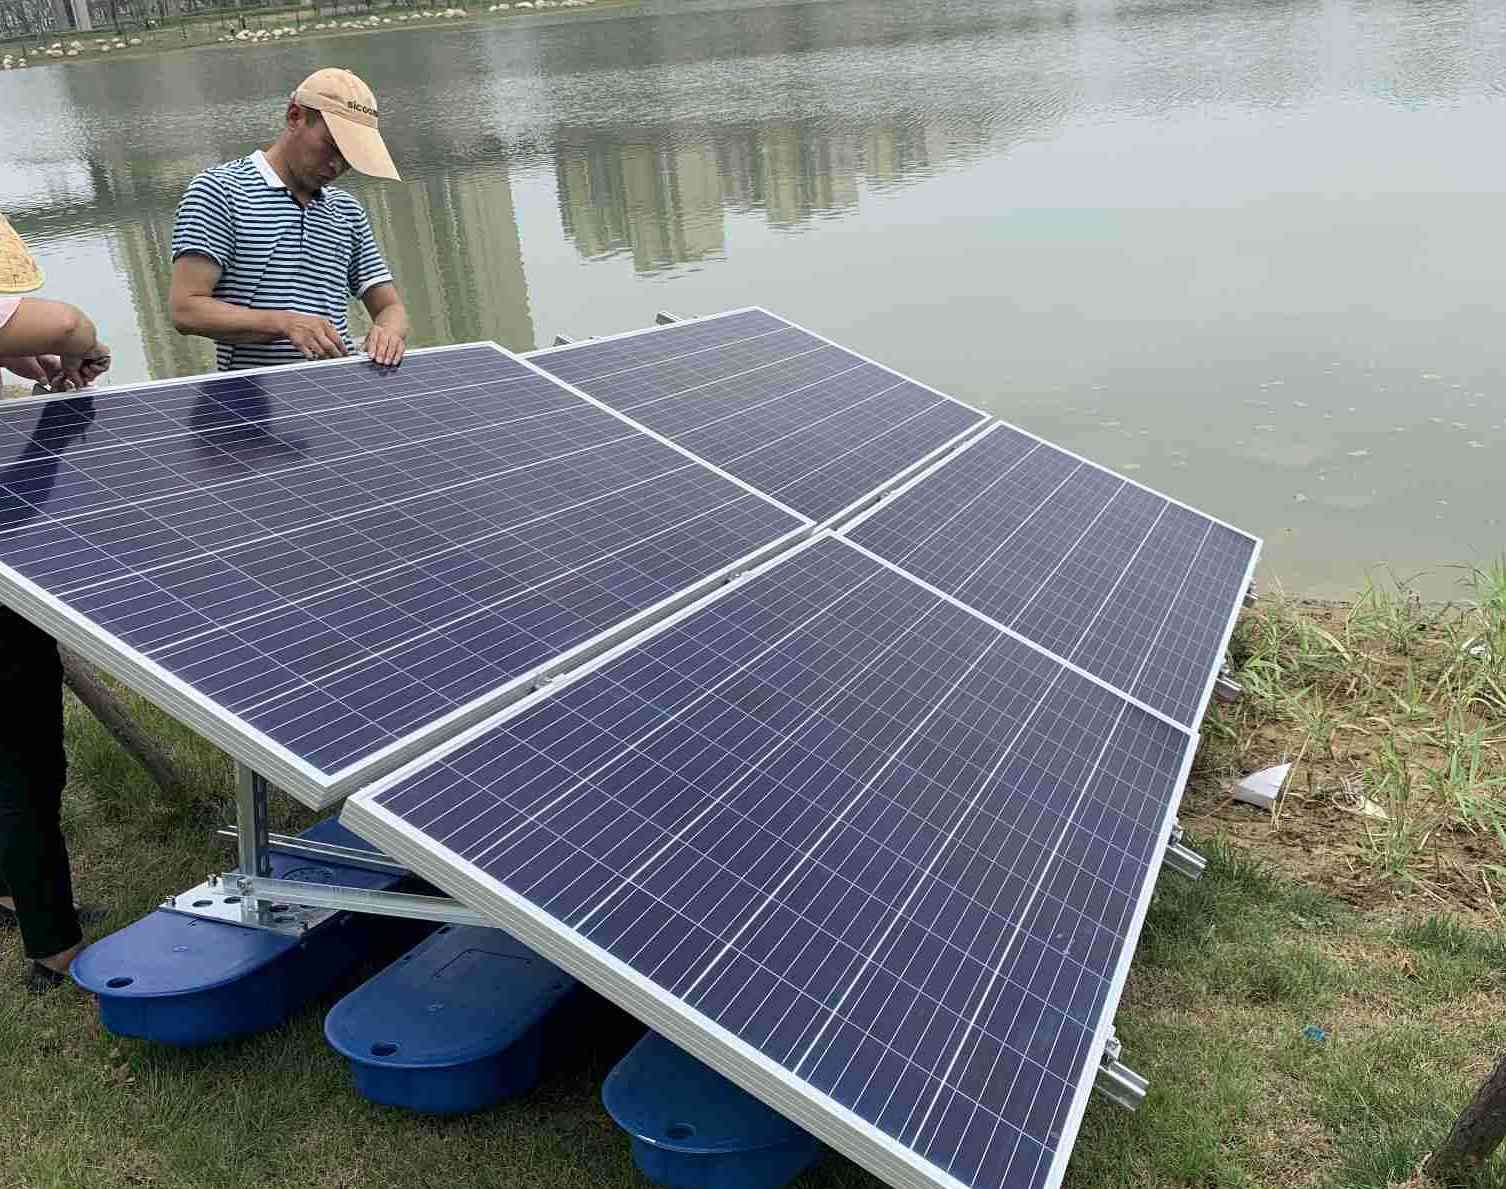  JNTECH sistema de aireación solar aplicado con éxito al proyecto de gobernanza ambiental en Shenling Tan, Anqing ciudad